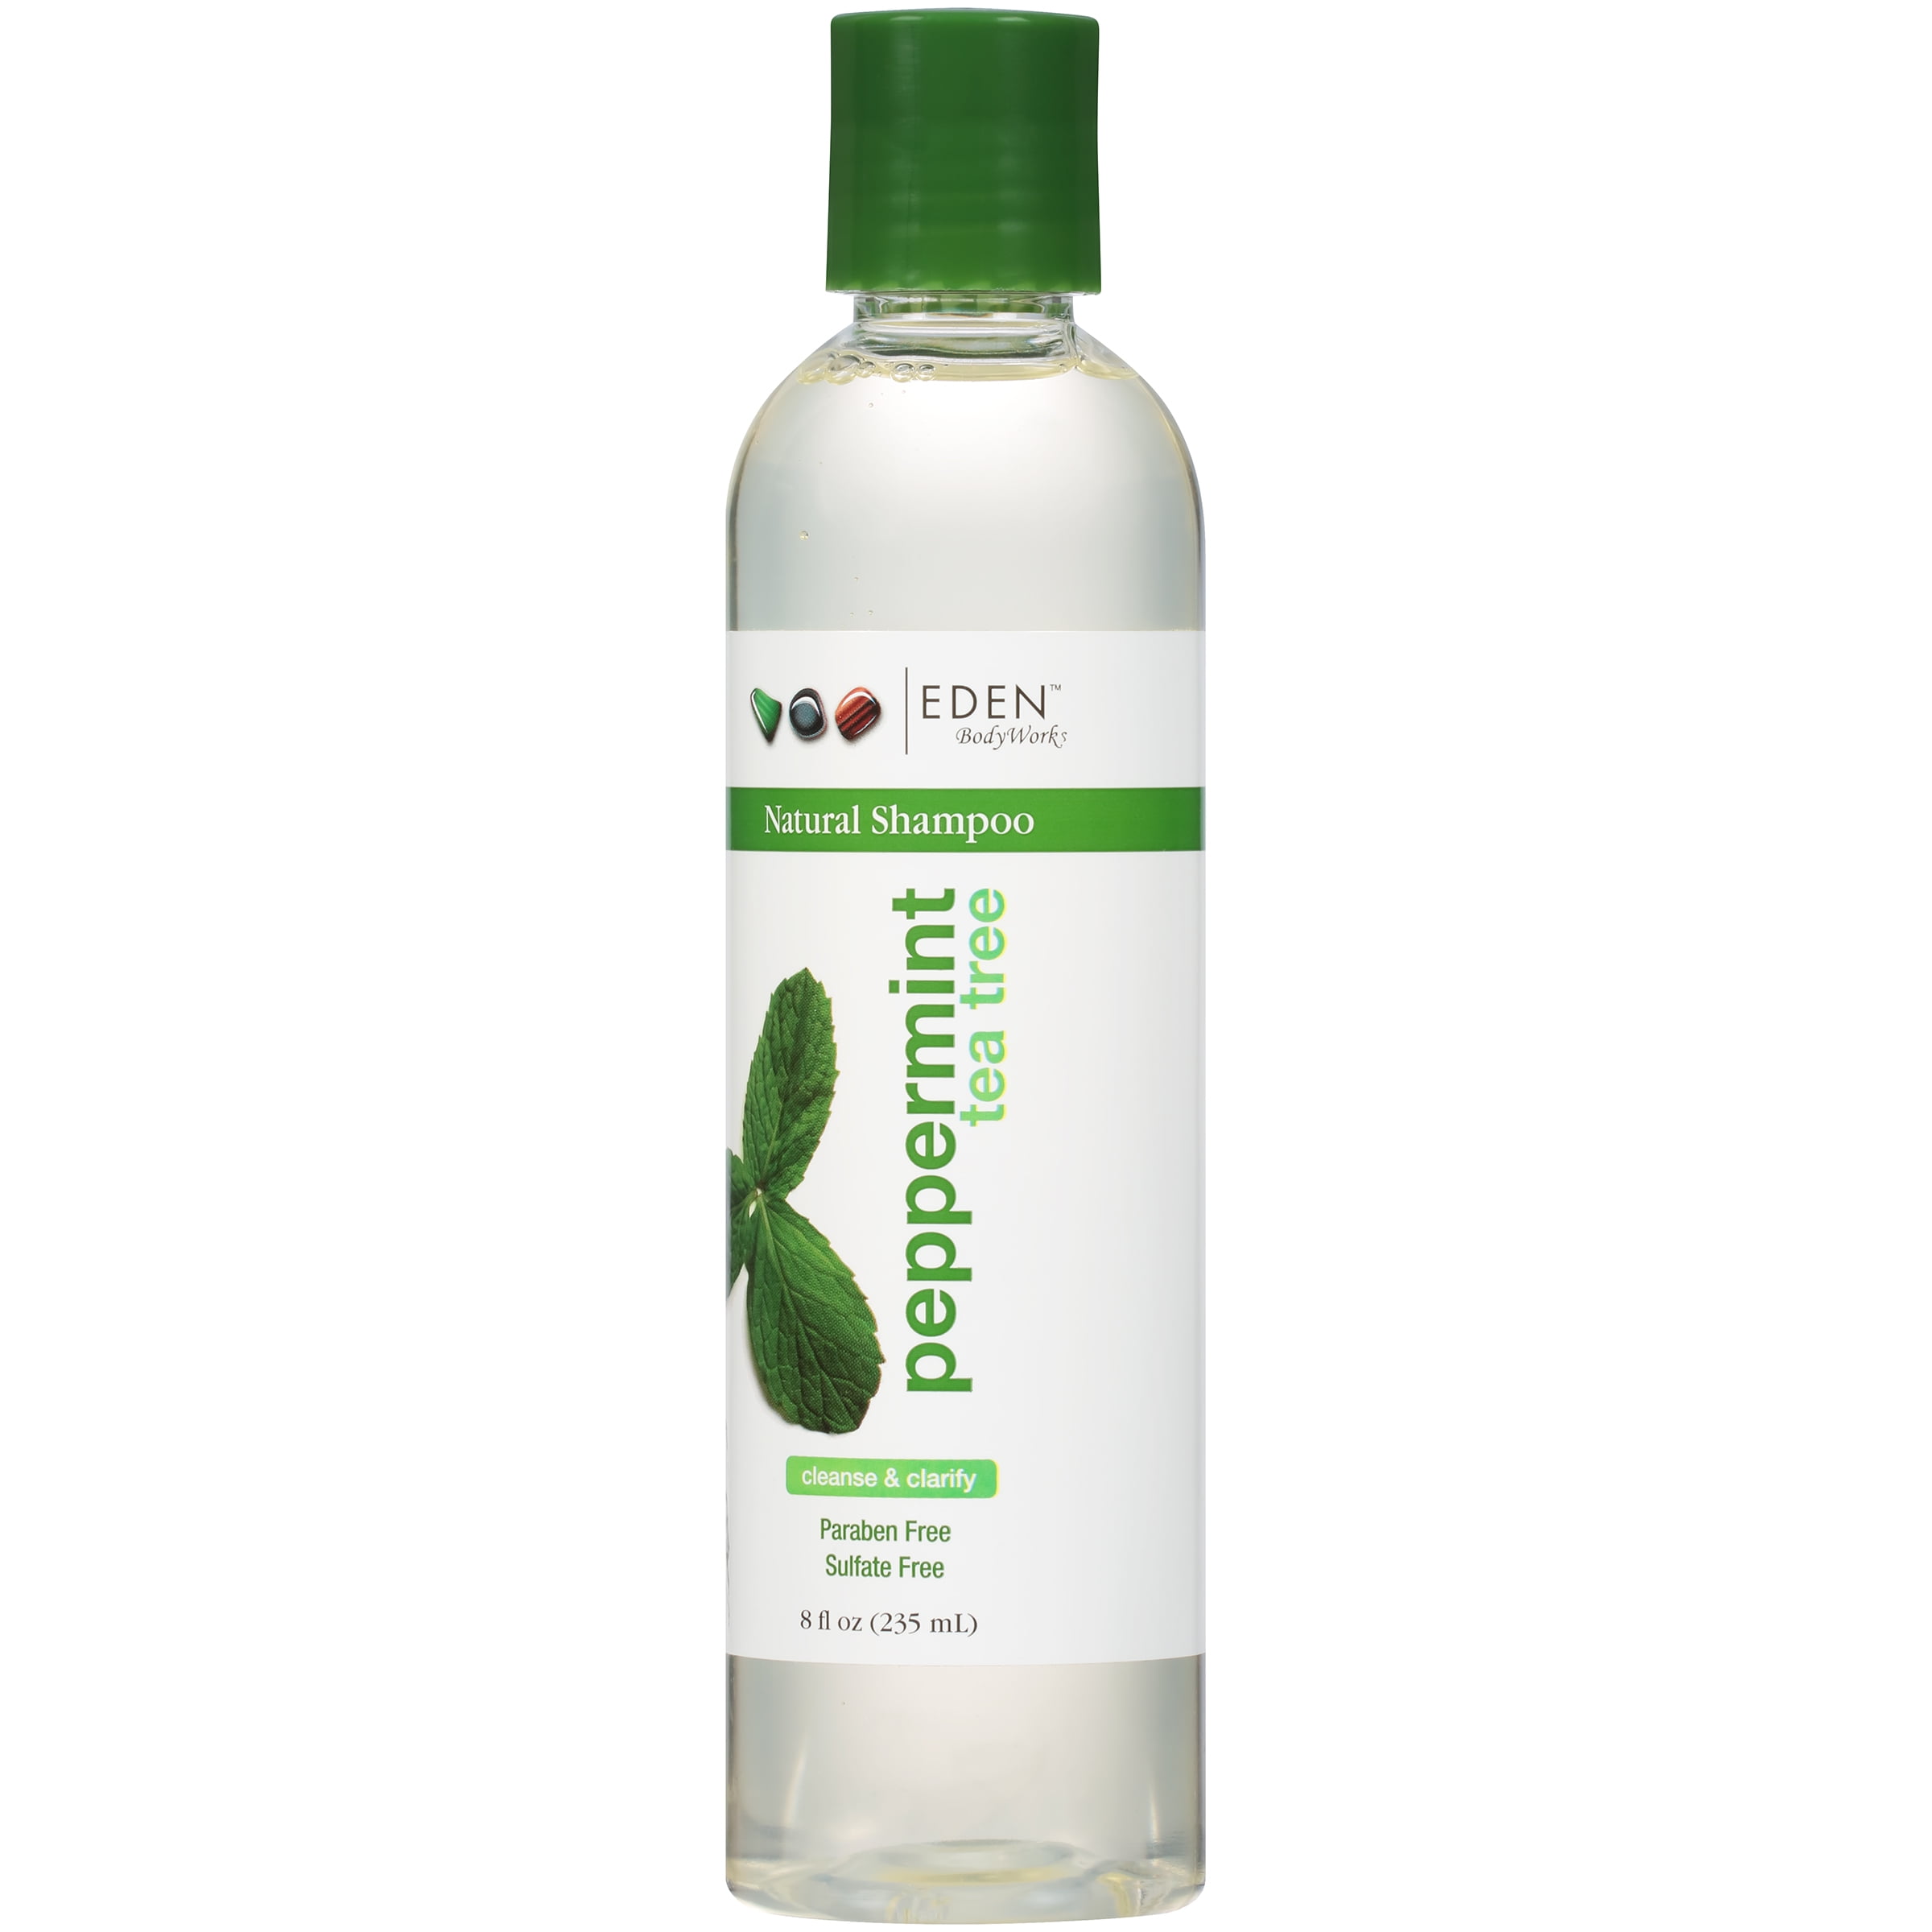 Peppermint Tea Tree Natural Shampoo & Body Bar, Peppermint Shampoo